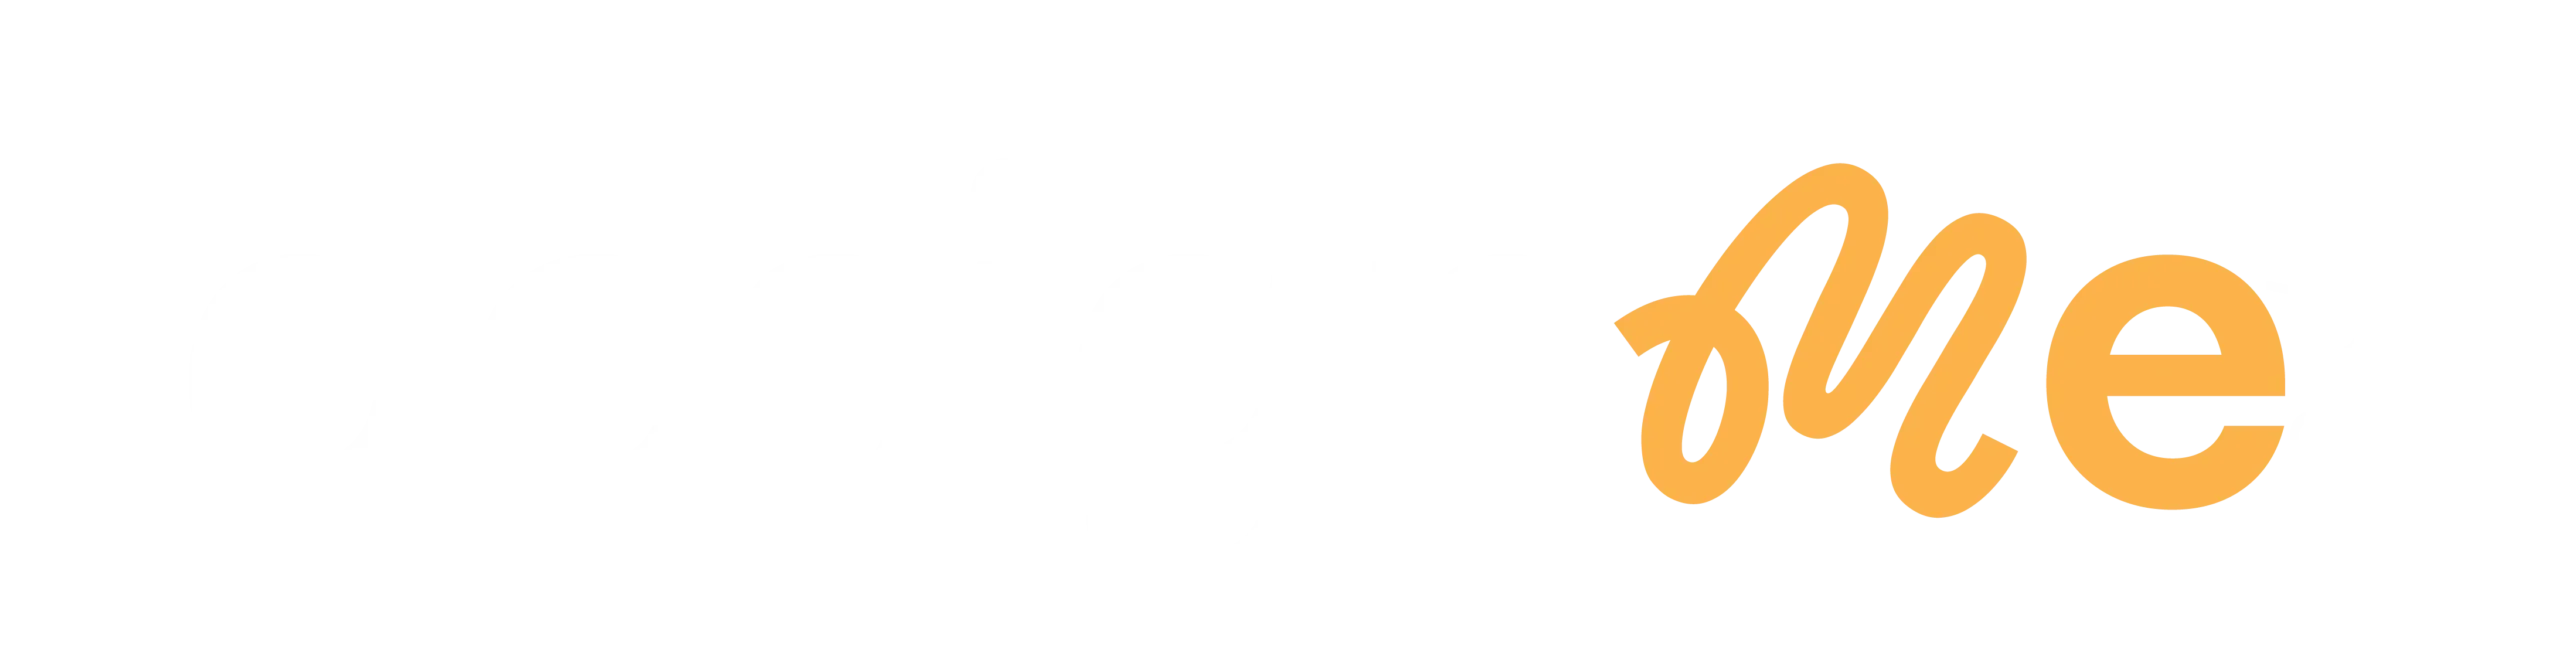 Design me pro logo